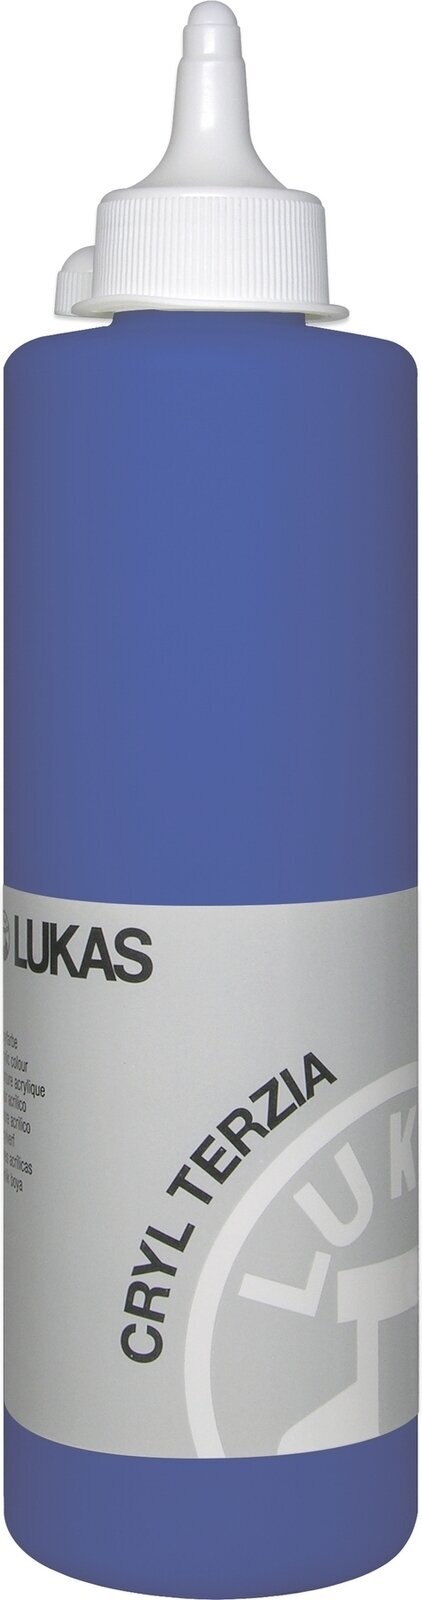 Acrylic Paint Lukas Cryl Terzia Acrylic Paint 500 ml Ultramarine